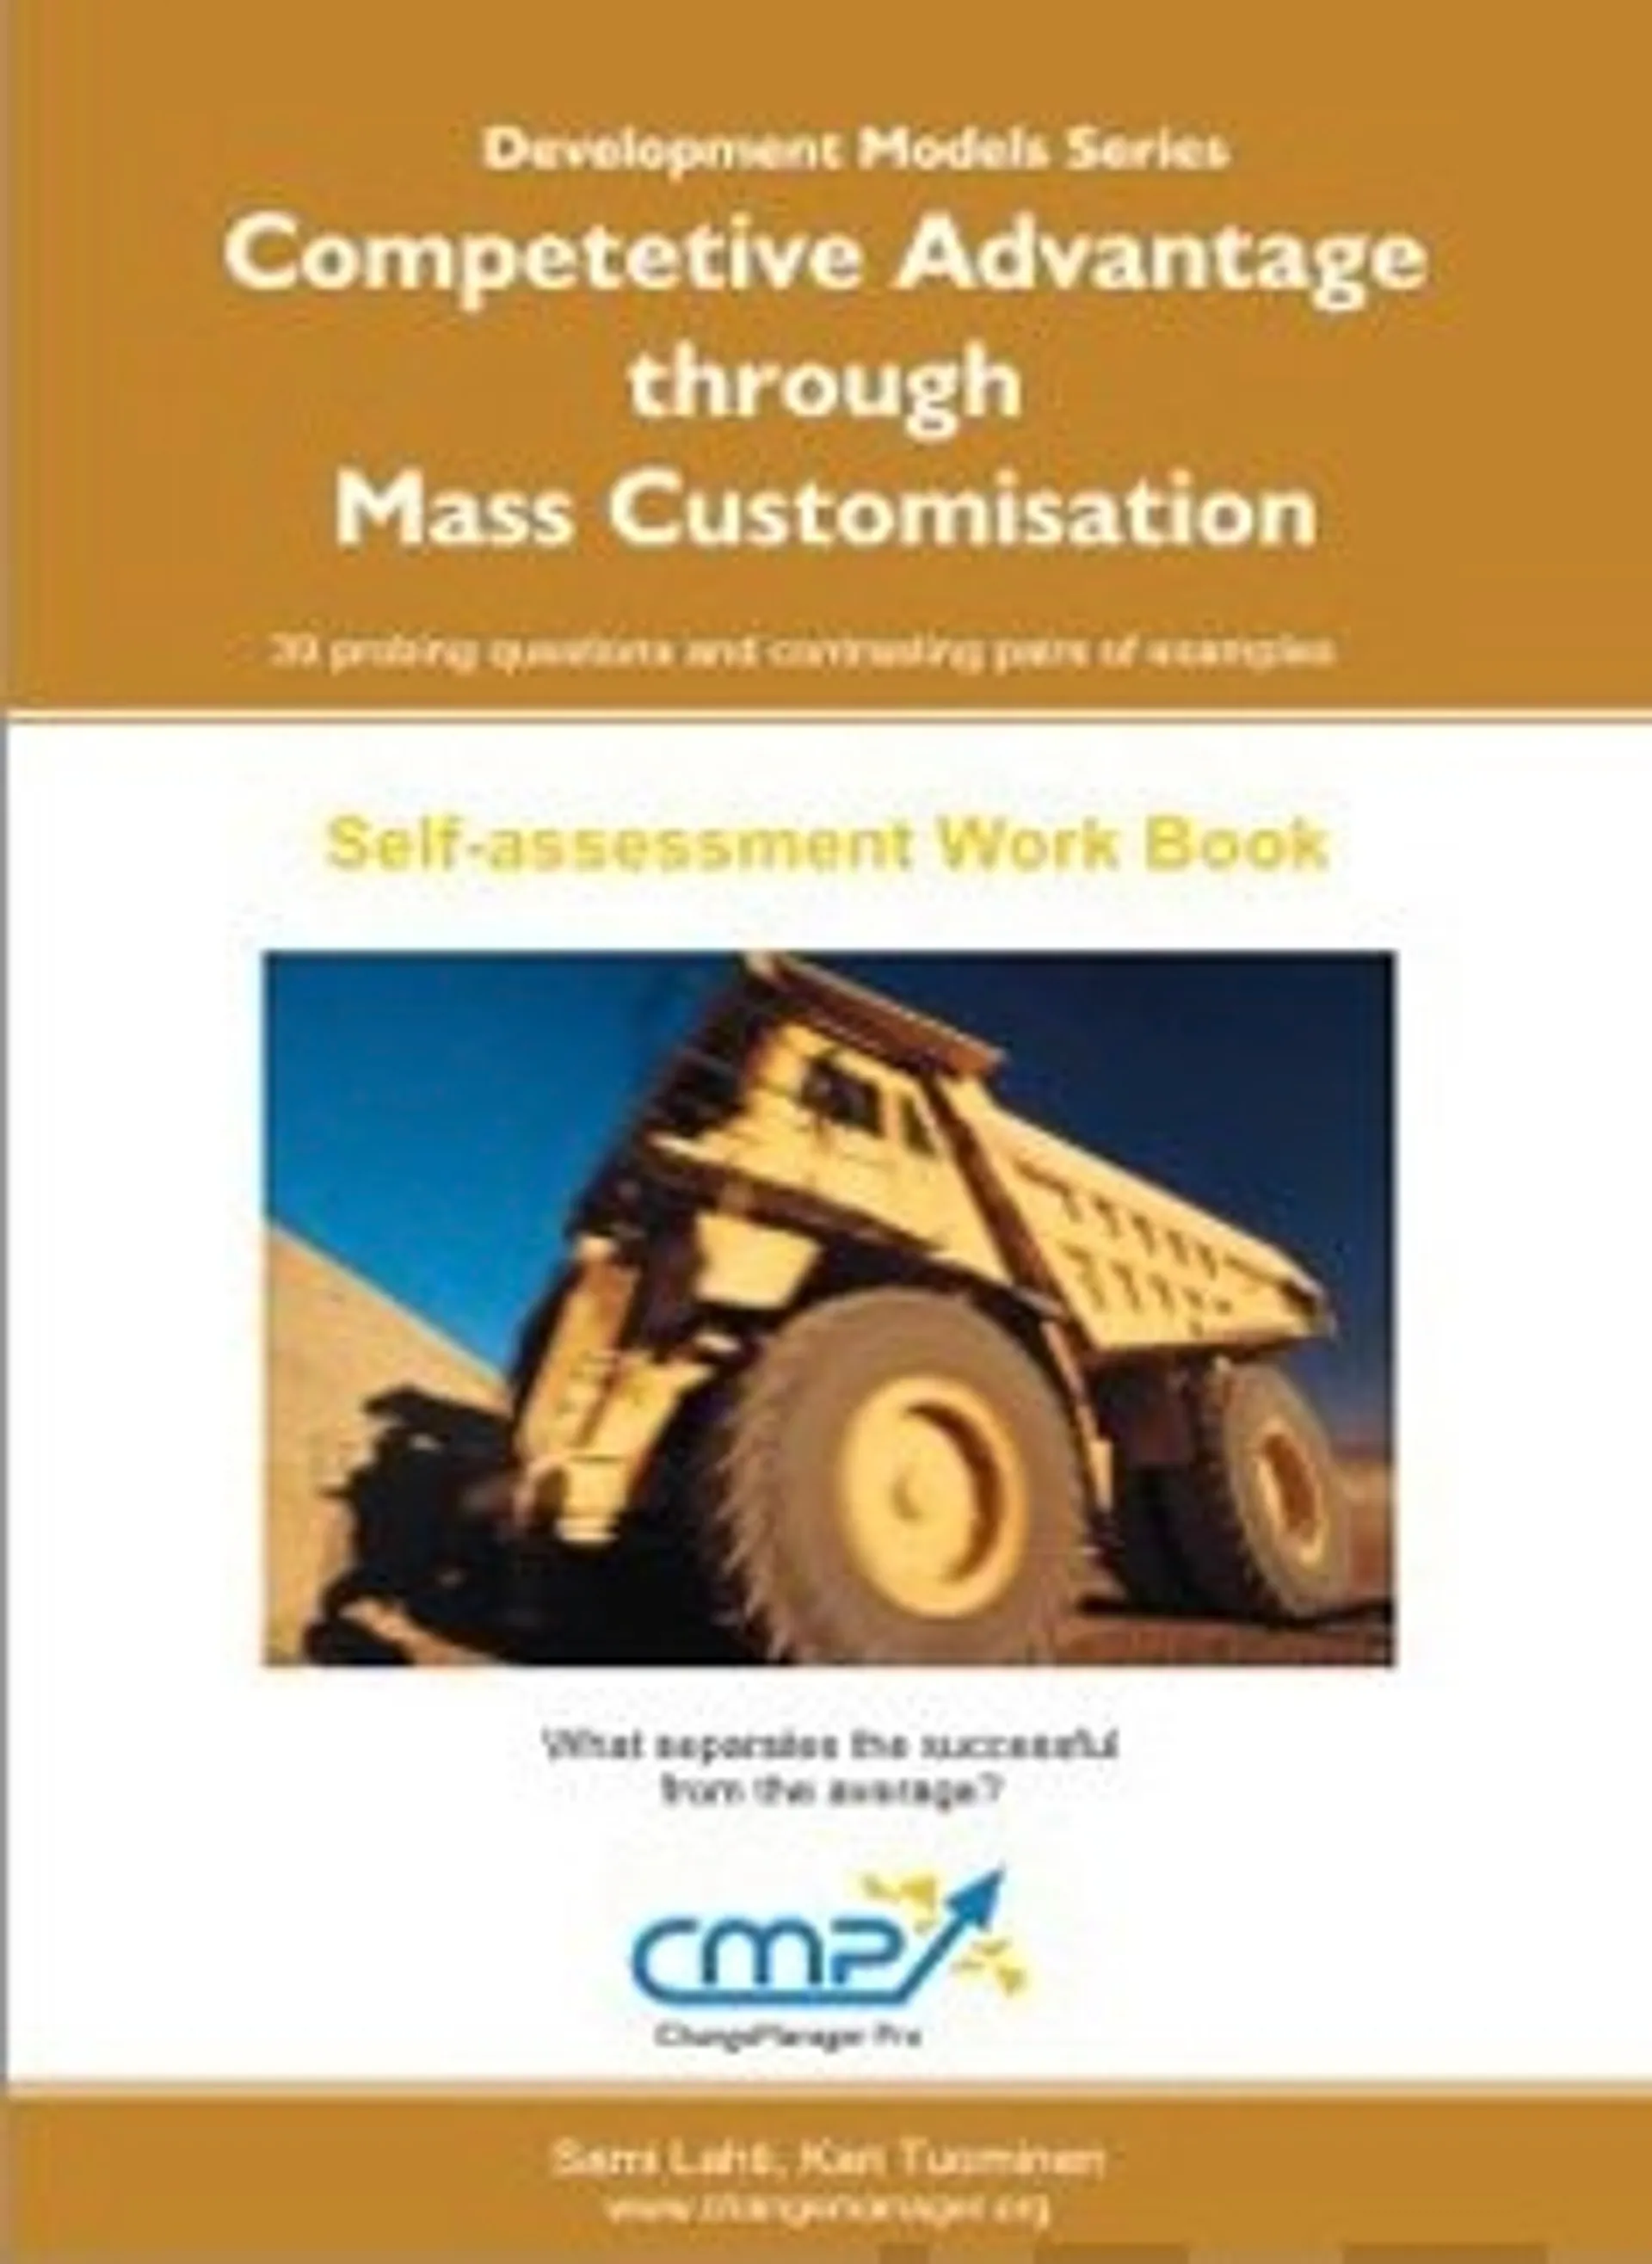 Competitive Advantage through Mass-Customization - EFQM 2010